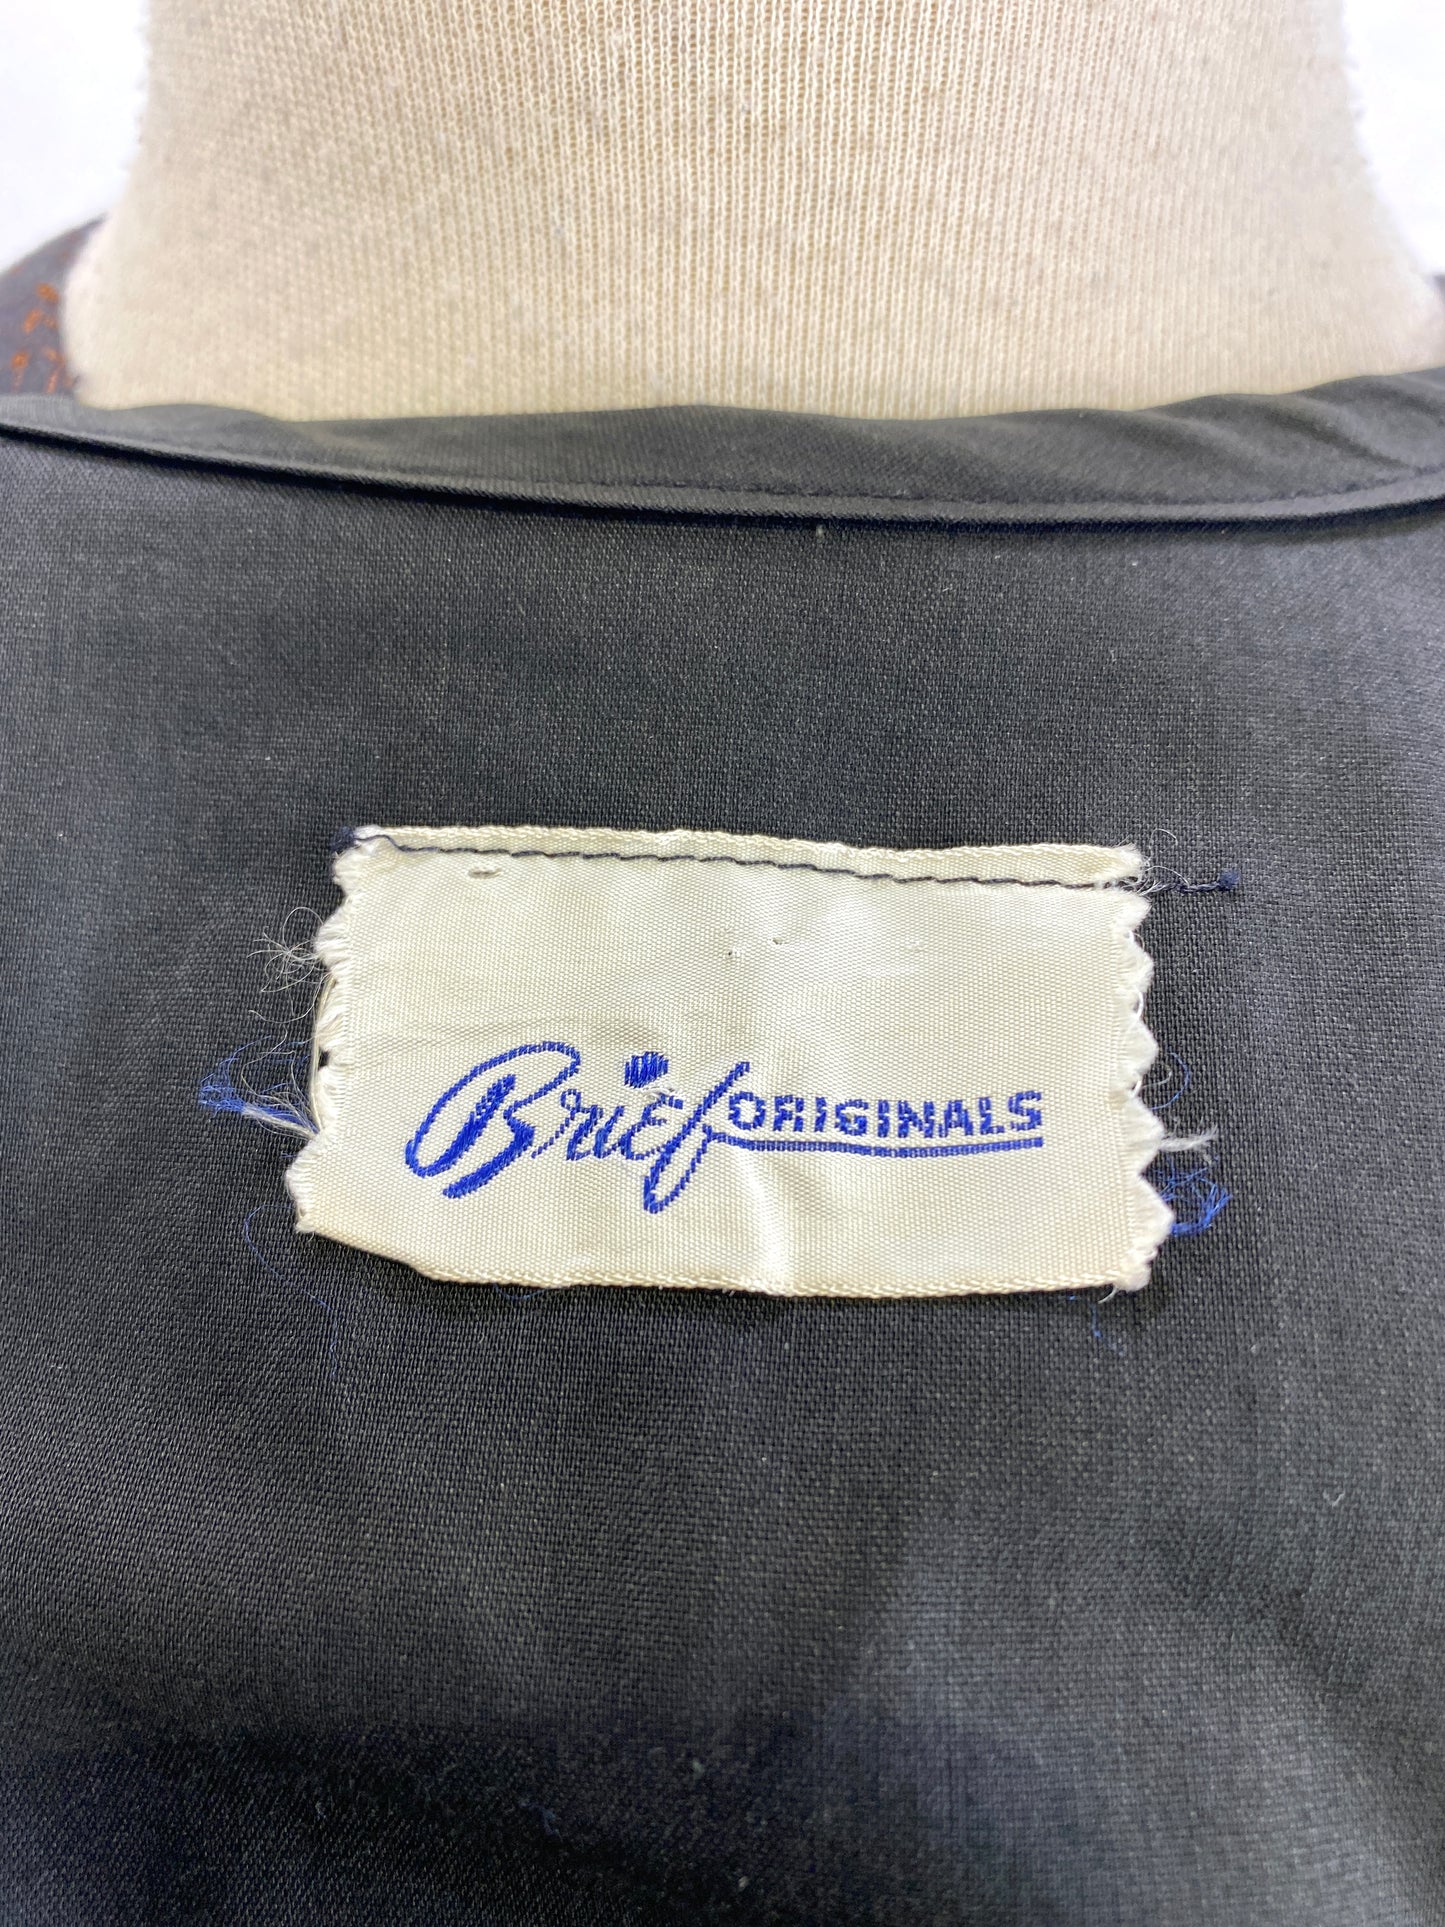 Brie Originals clothing label on 1960s bolero jacket. Ian Drummond Vintage. 